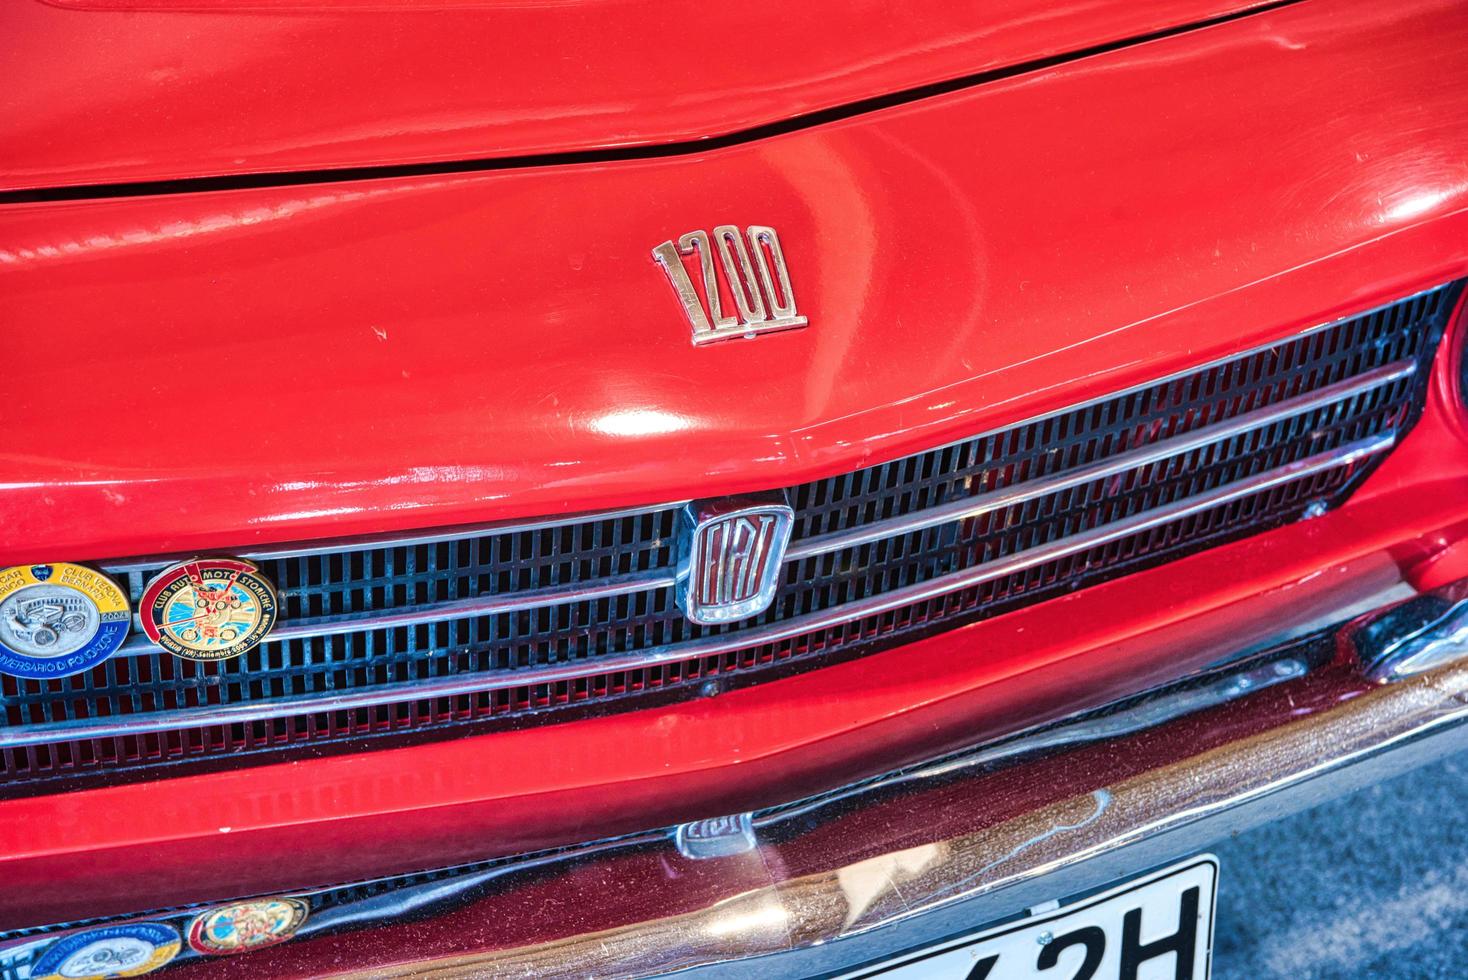 friedrichshafen - mai 2019 logo emblème du coupé rouge fiat osi 1200 spyder 1965 au motorworld classics bodensee le 11 mai 2019 à friedrichshafen, allemagne photo